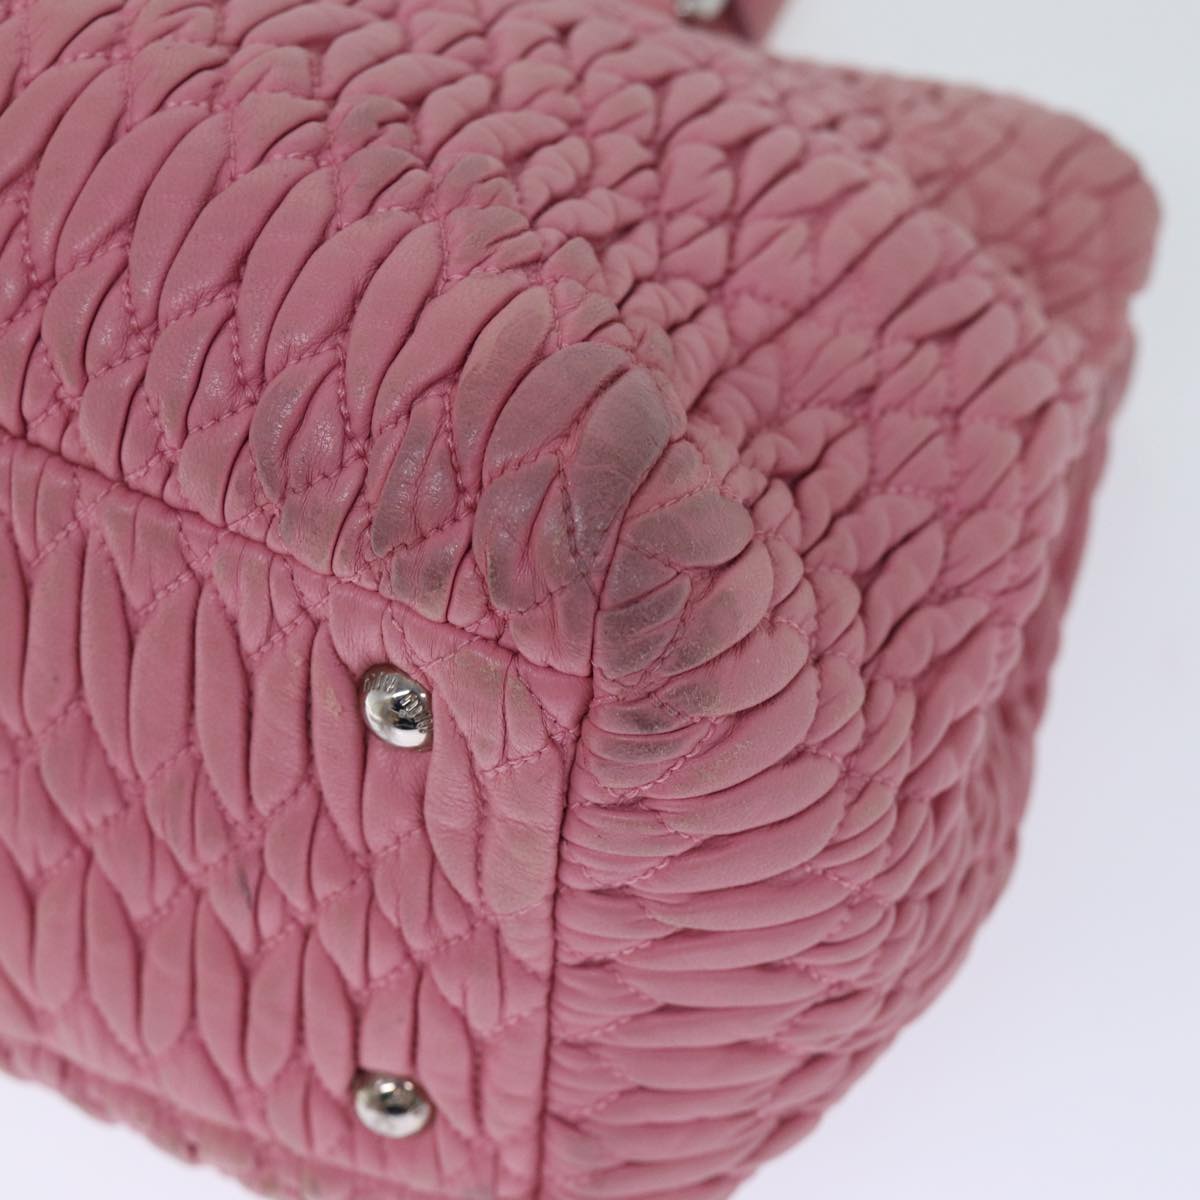 Miu Miu Materasse Hand Bag Leather 2way Pink Auth ep4153